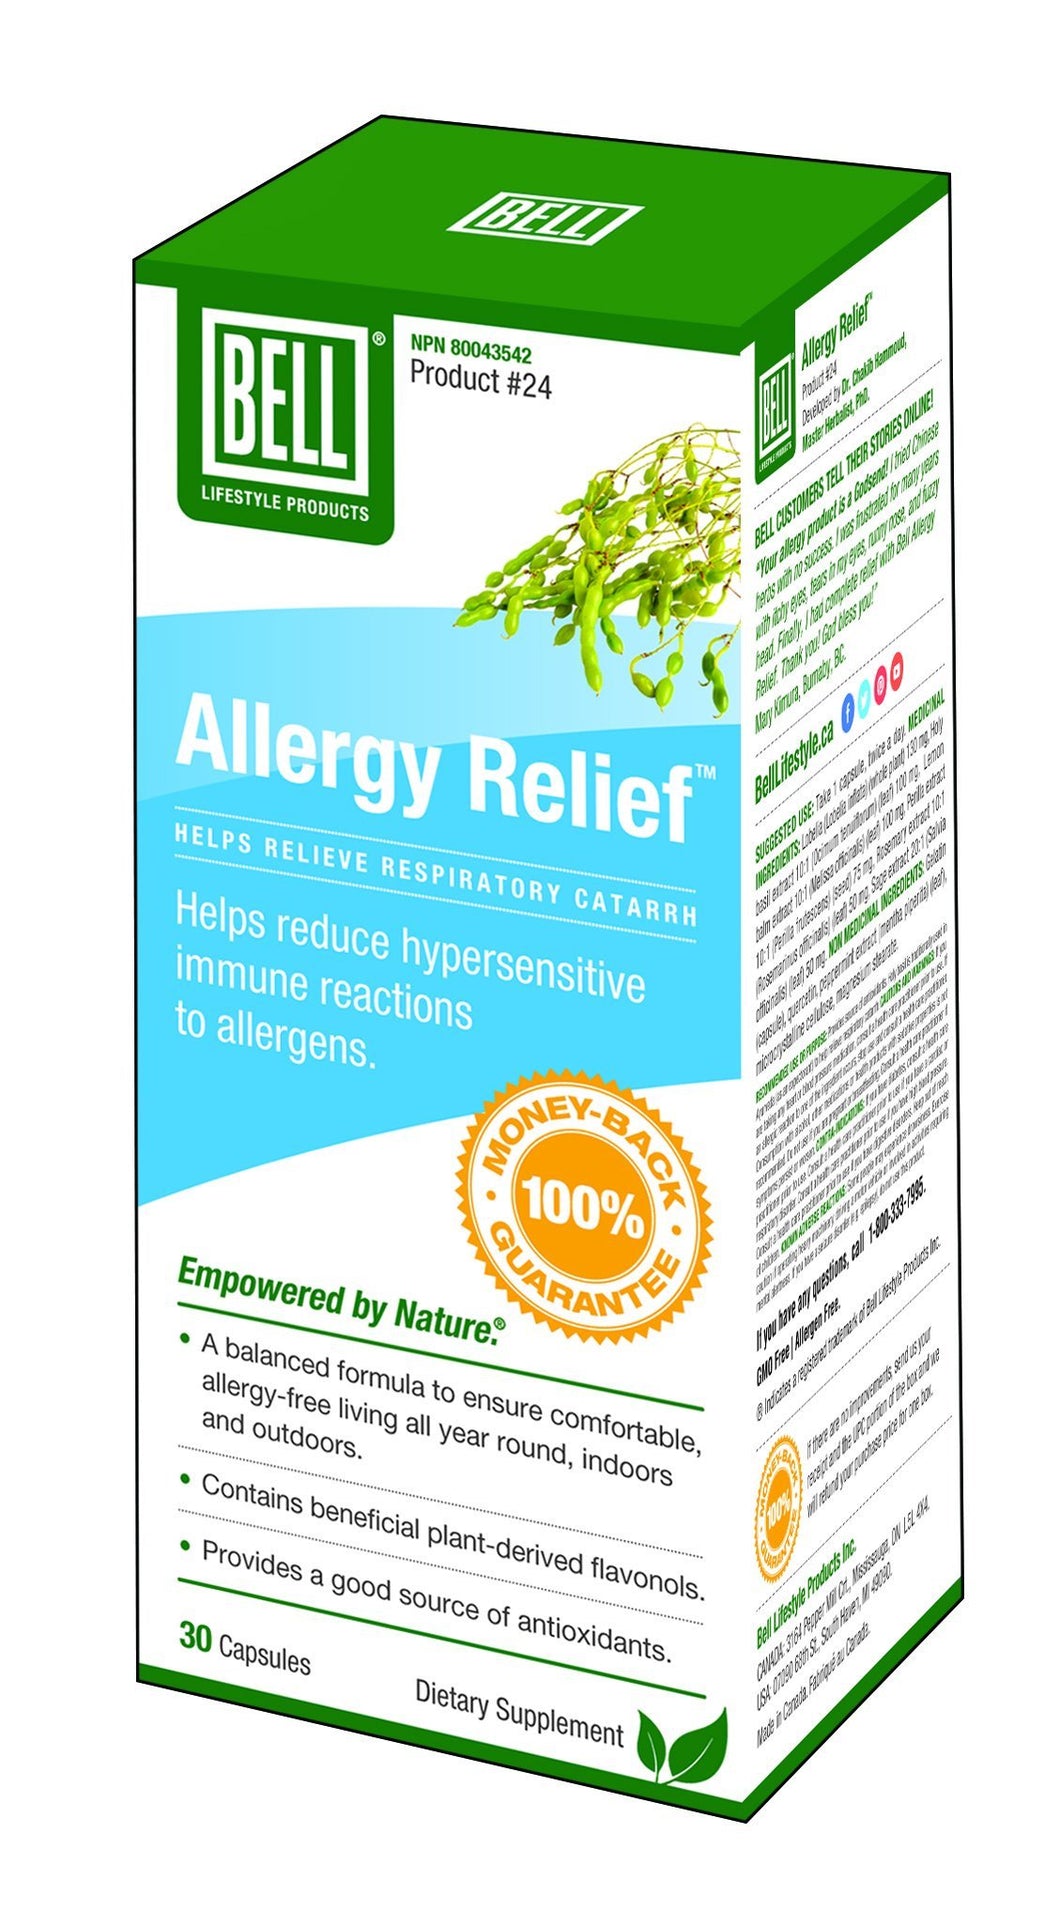 Allergy Relief™